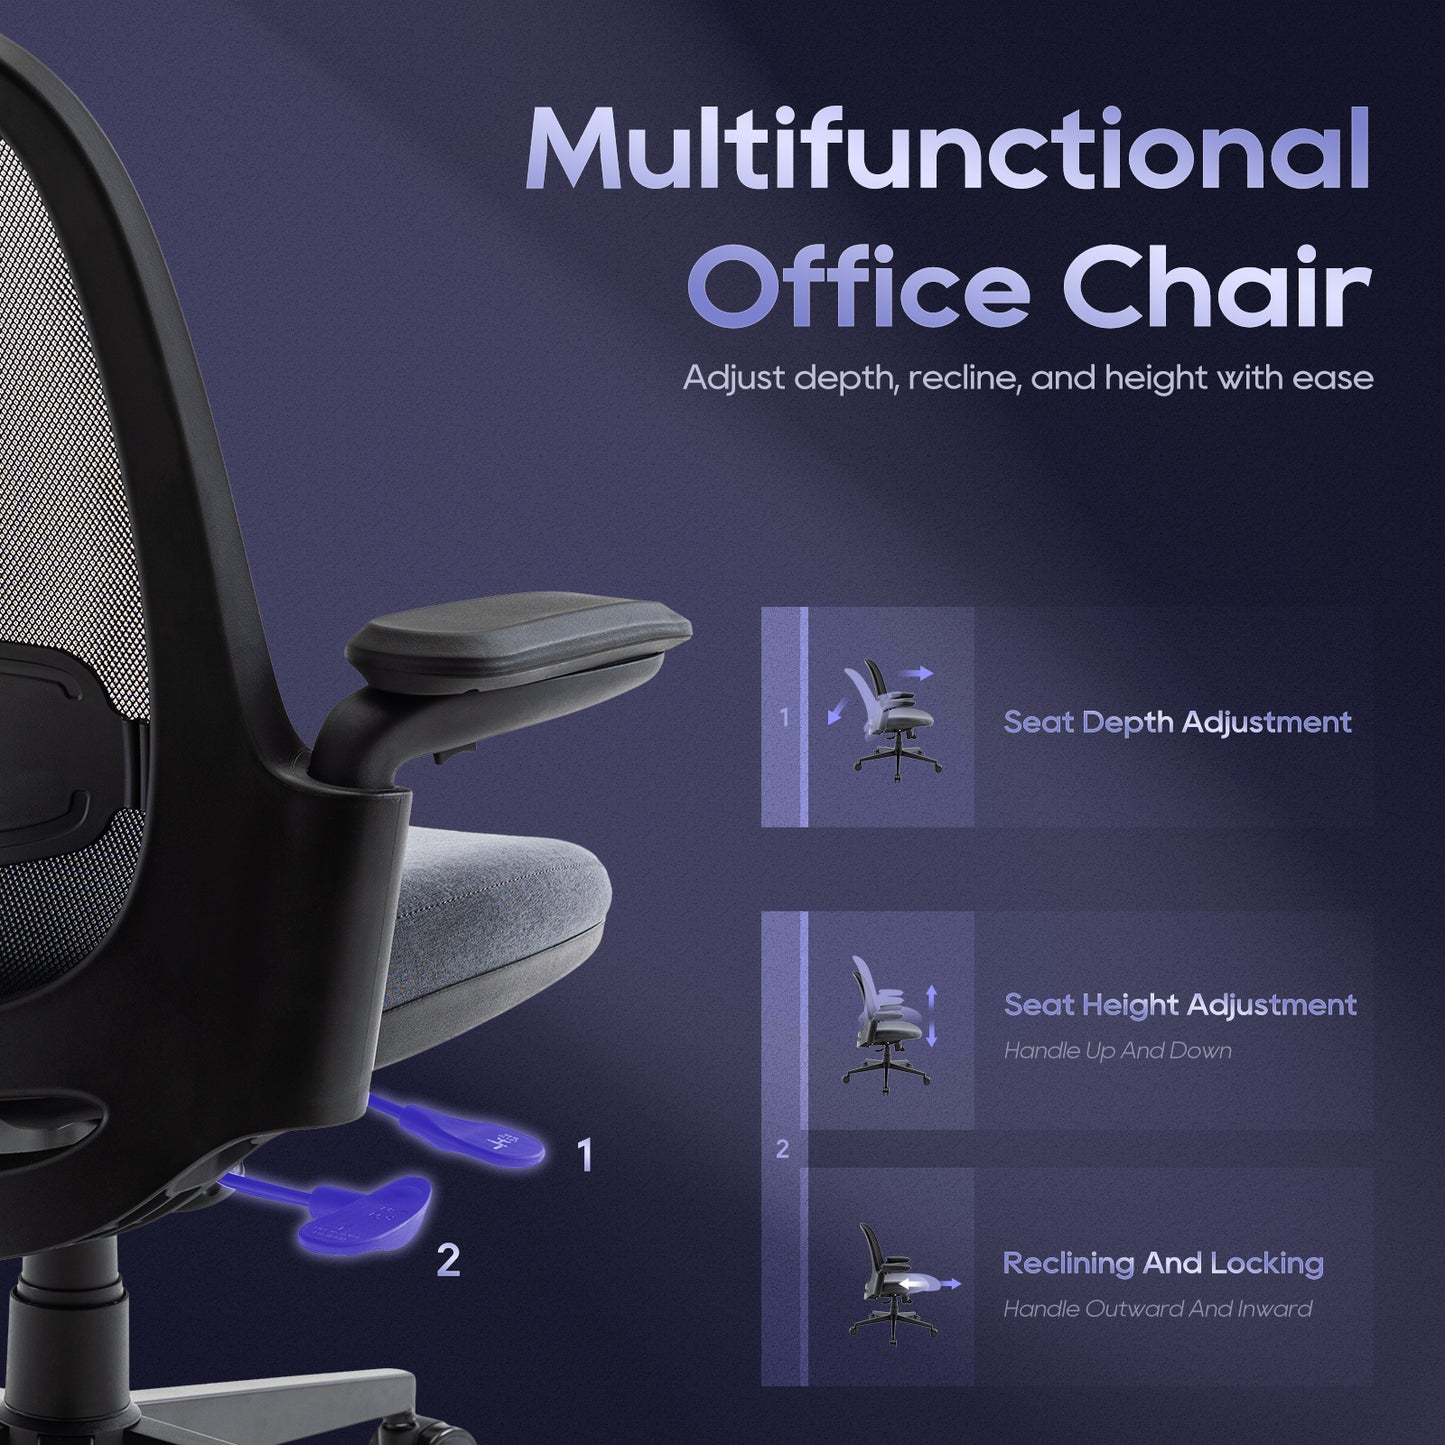 COLAMY Mesh Black Ergonomic Mid Back Office Chair Model.3084